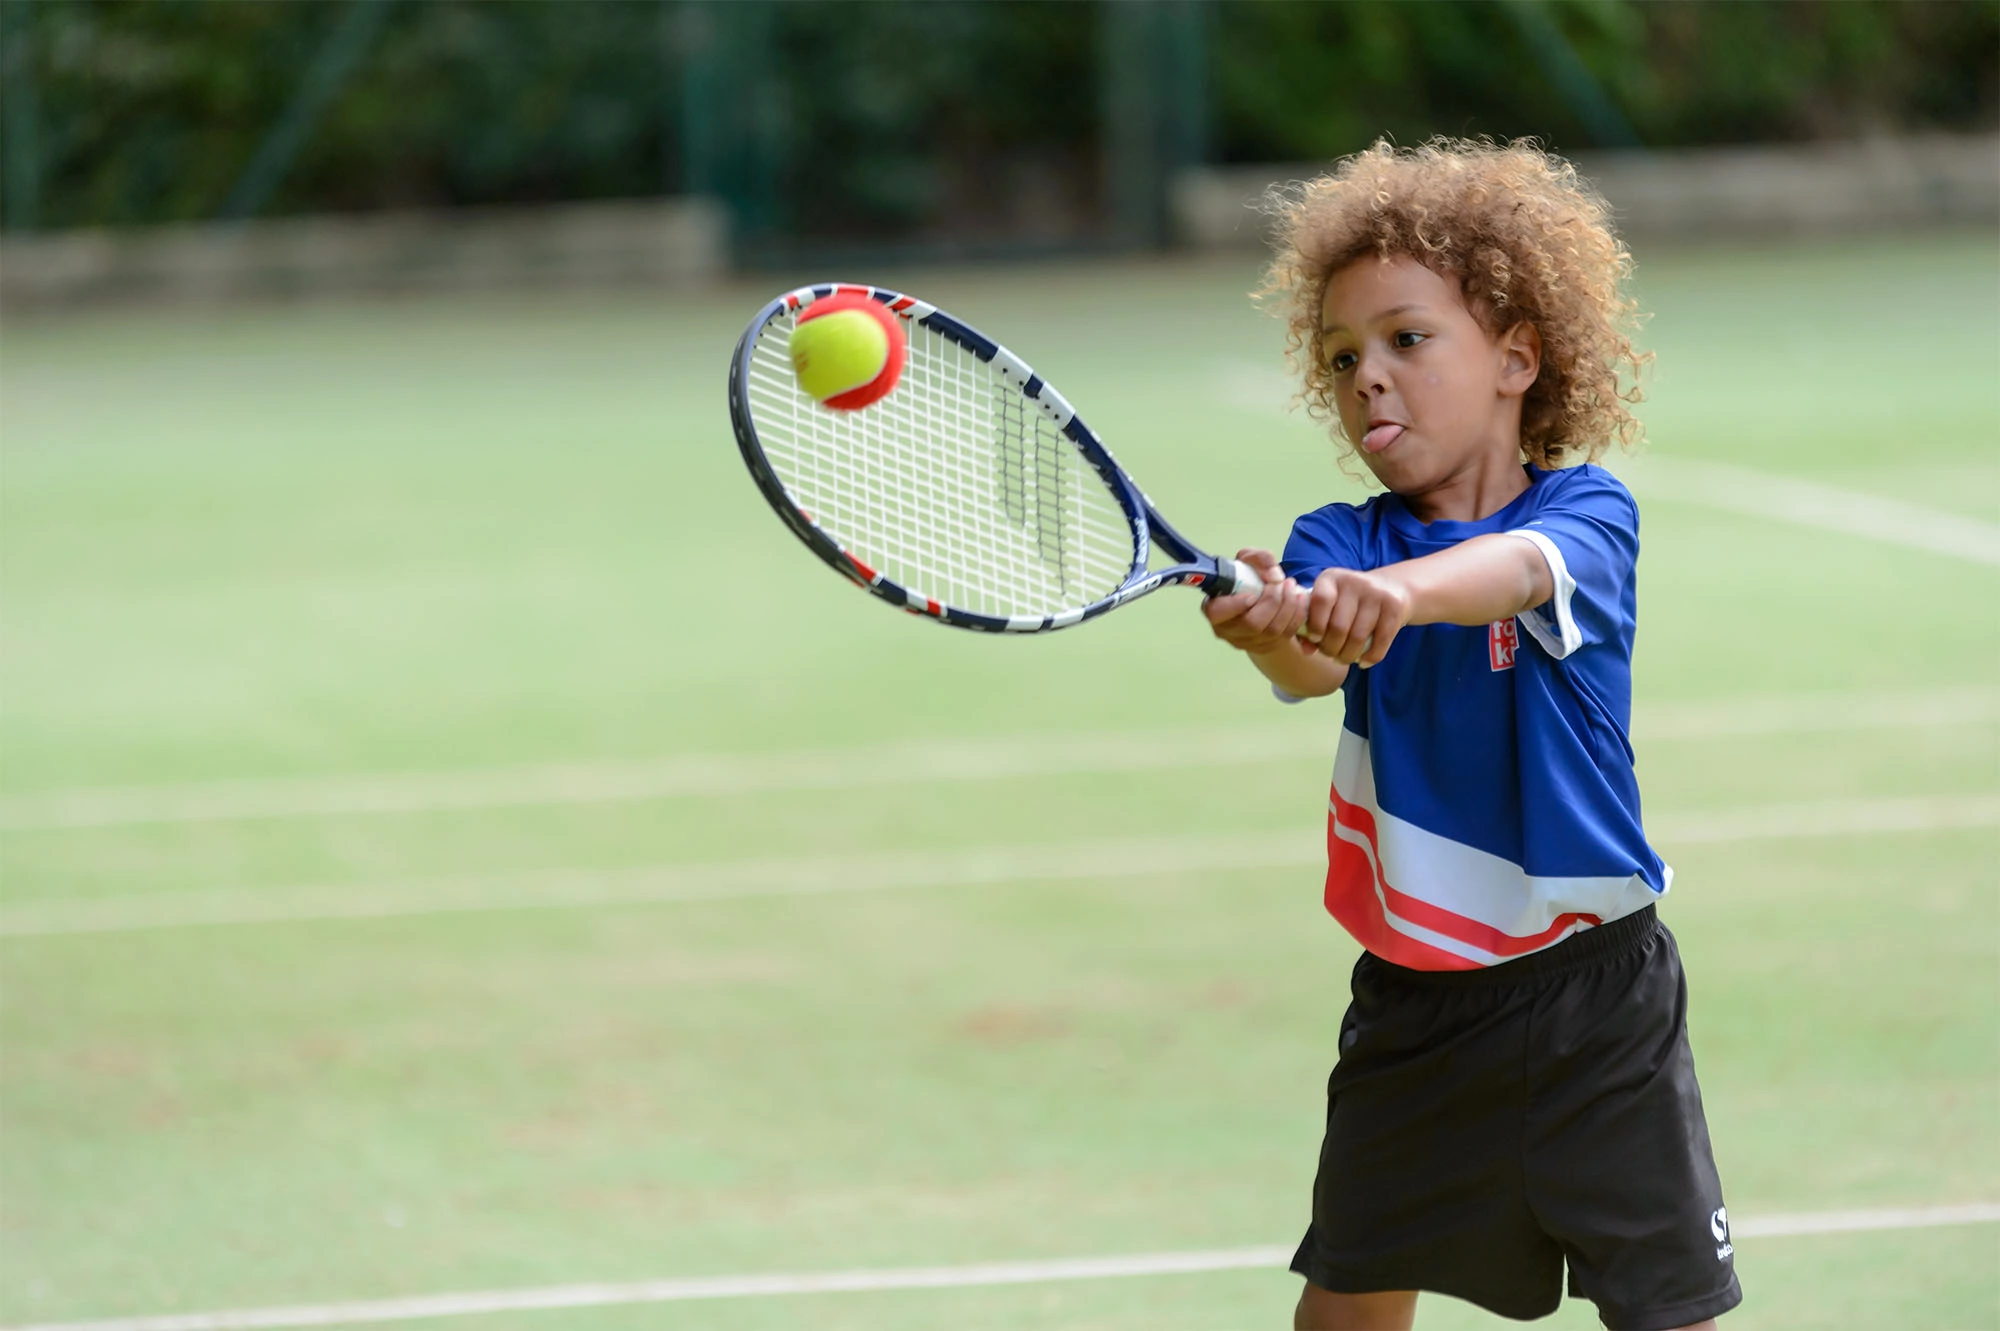 boy hitting a ball with a tennis racket